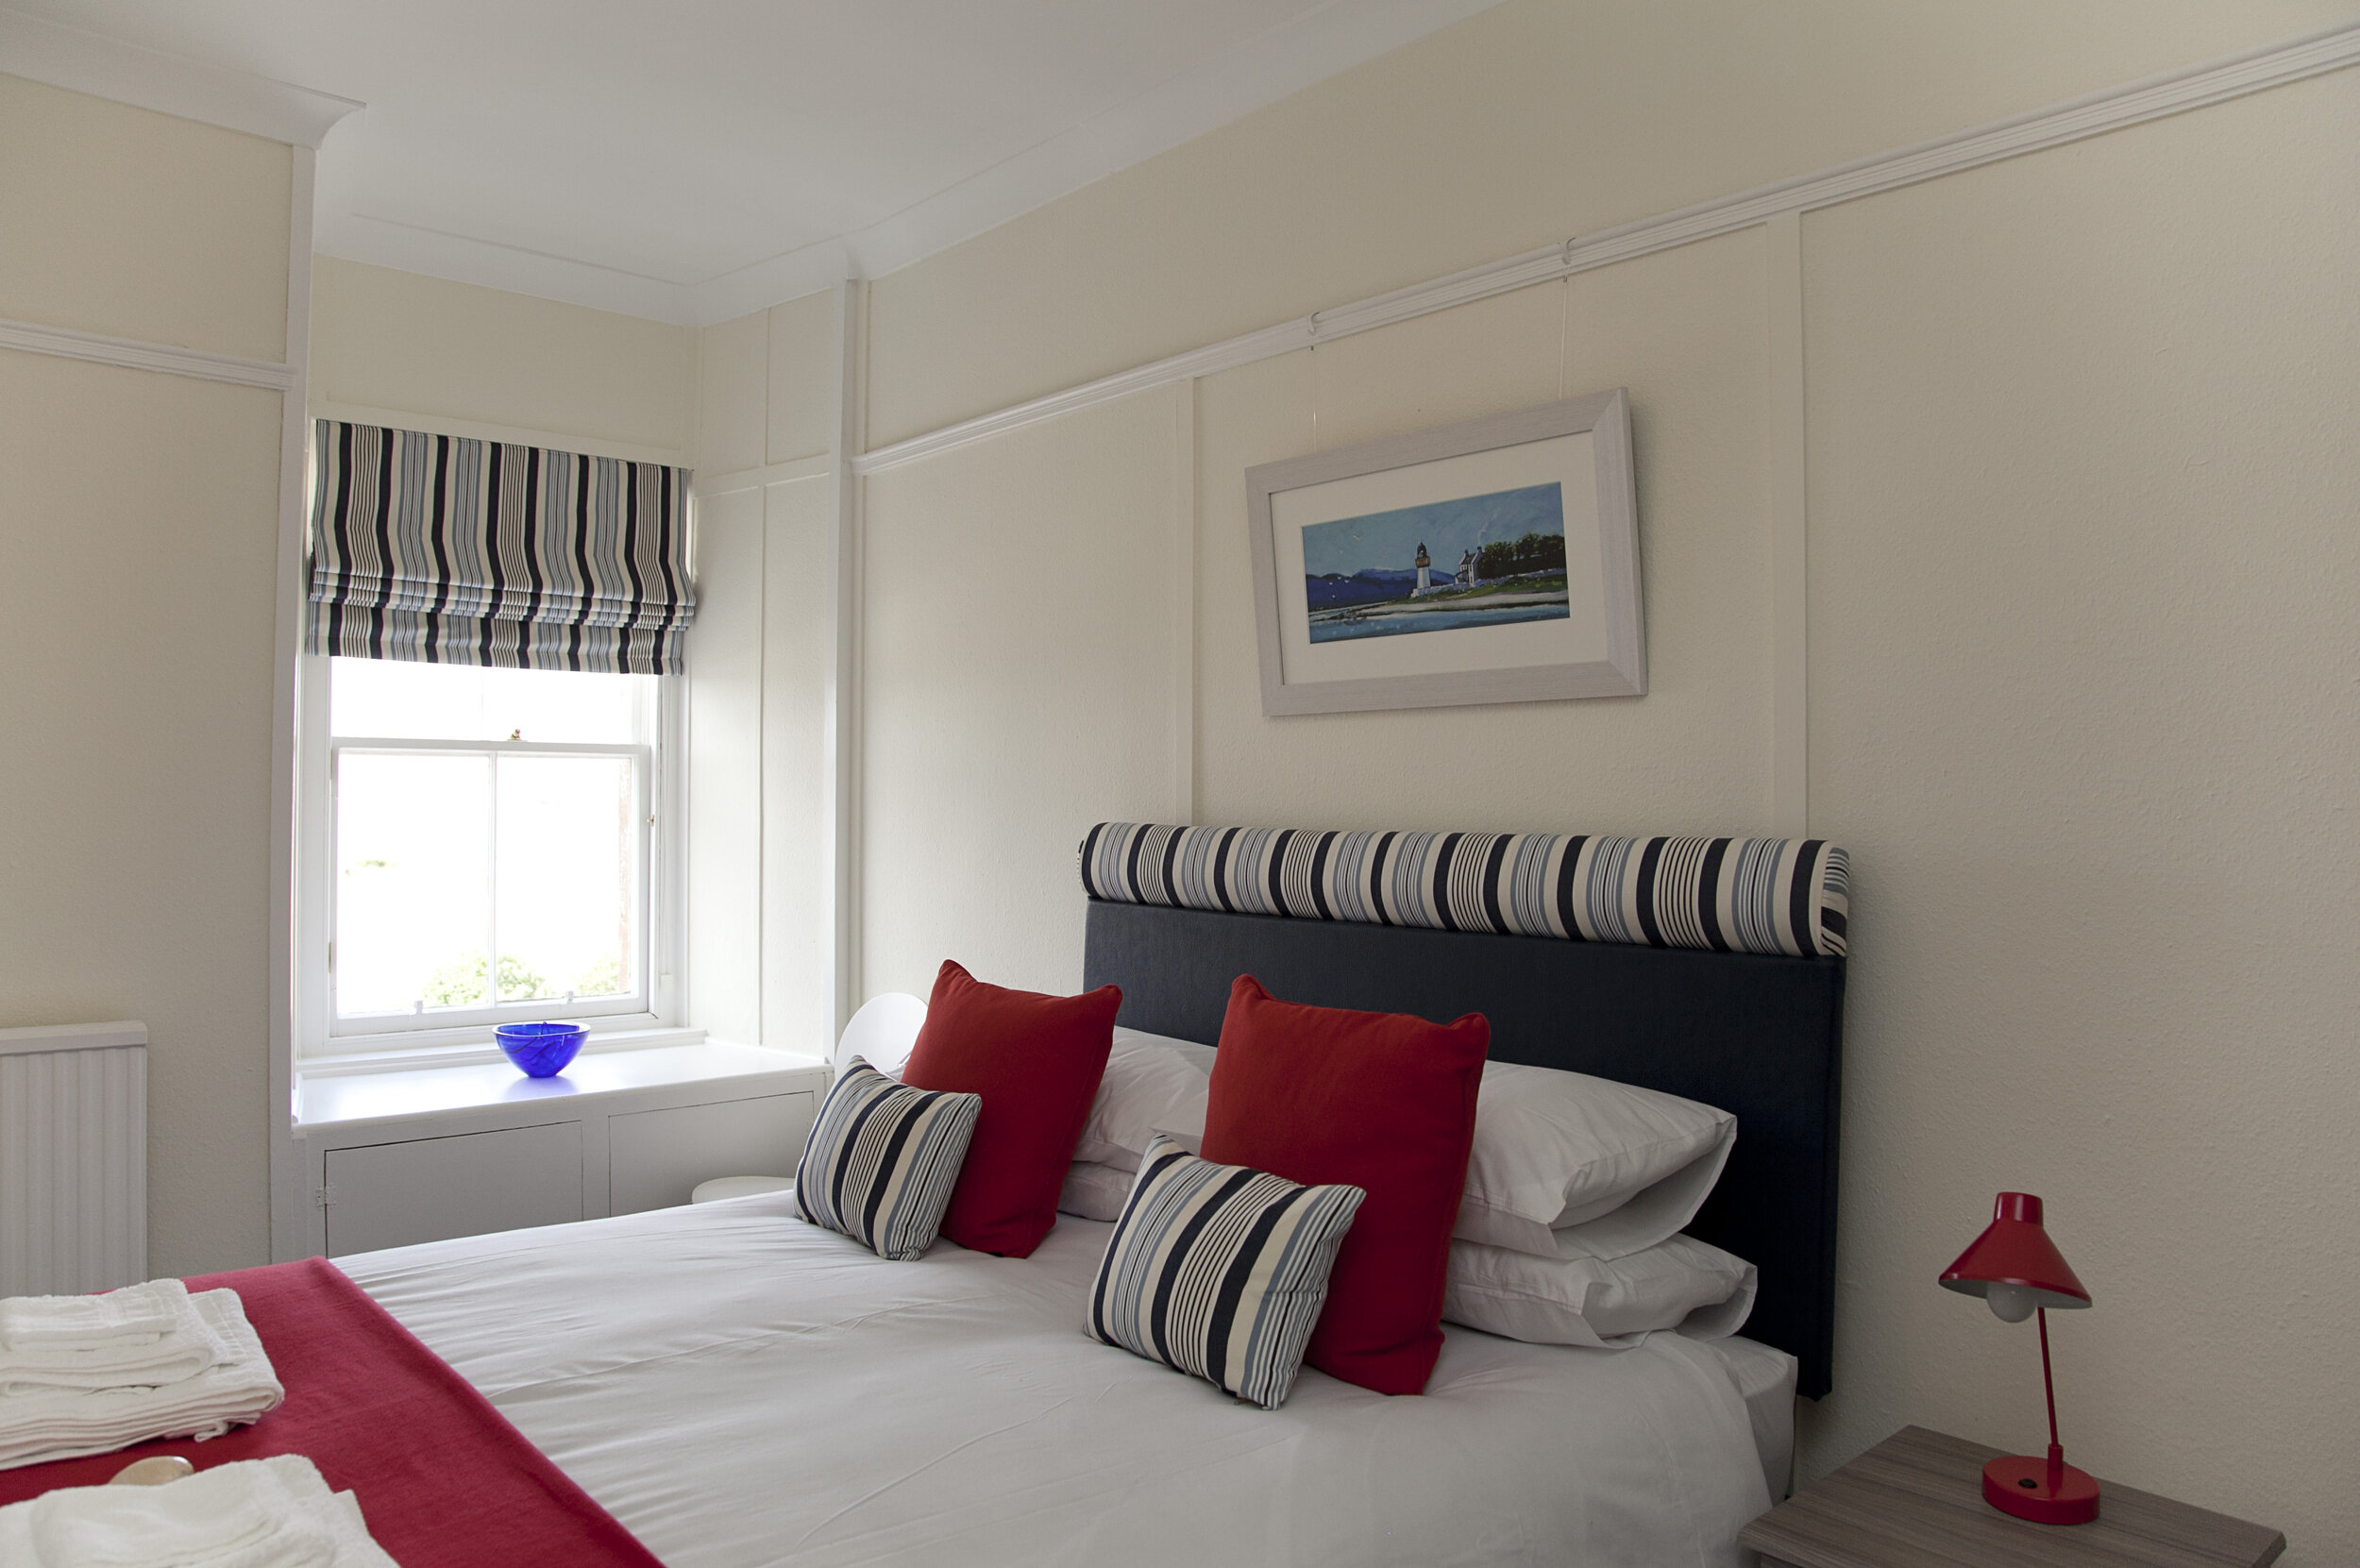 Kingarth Bedroom 4 (double).jpg